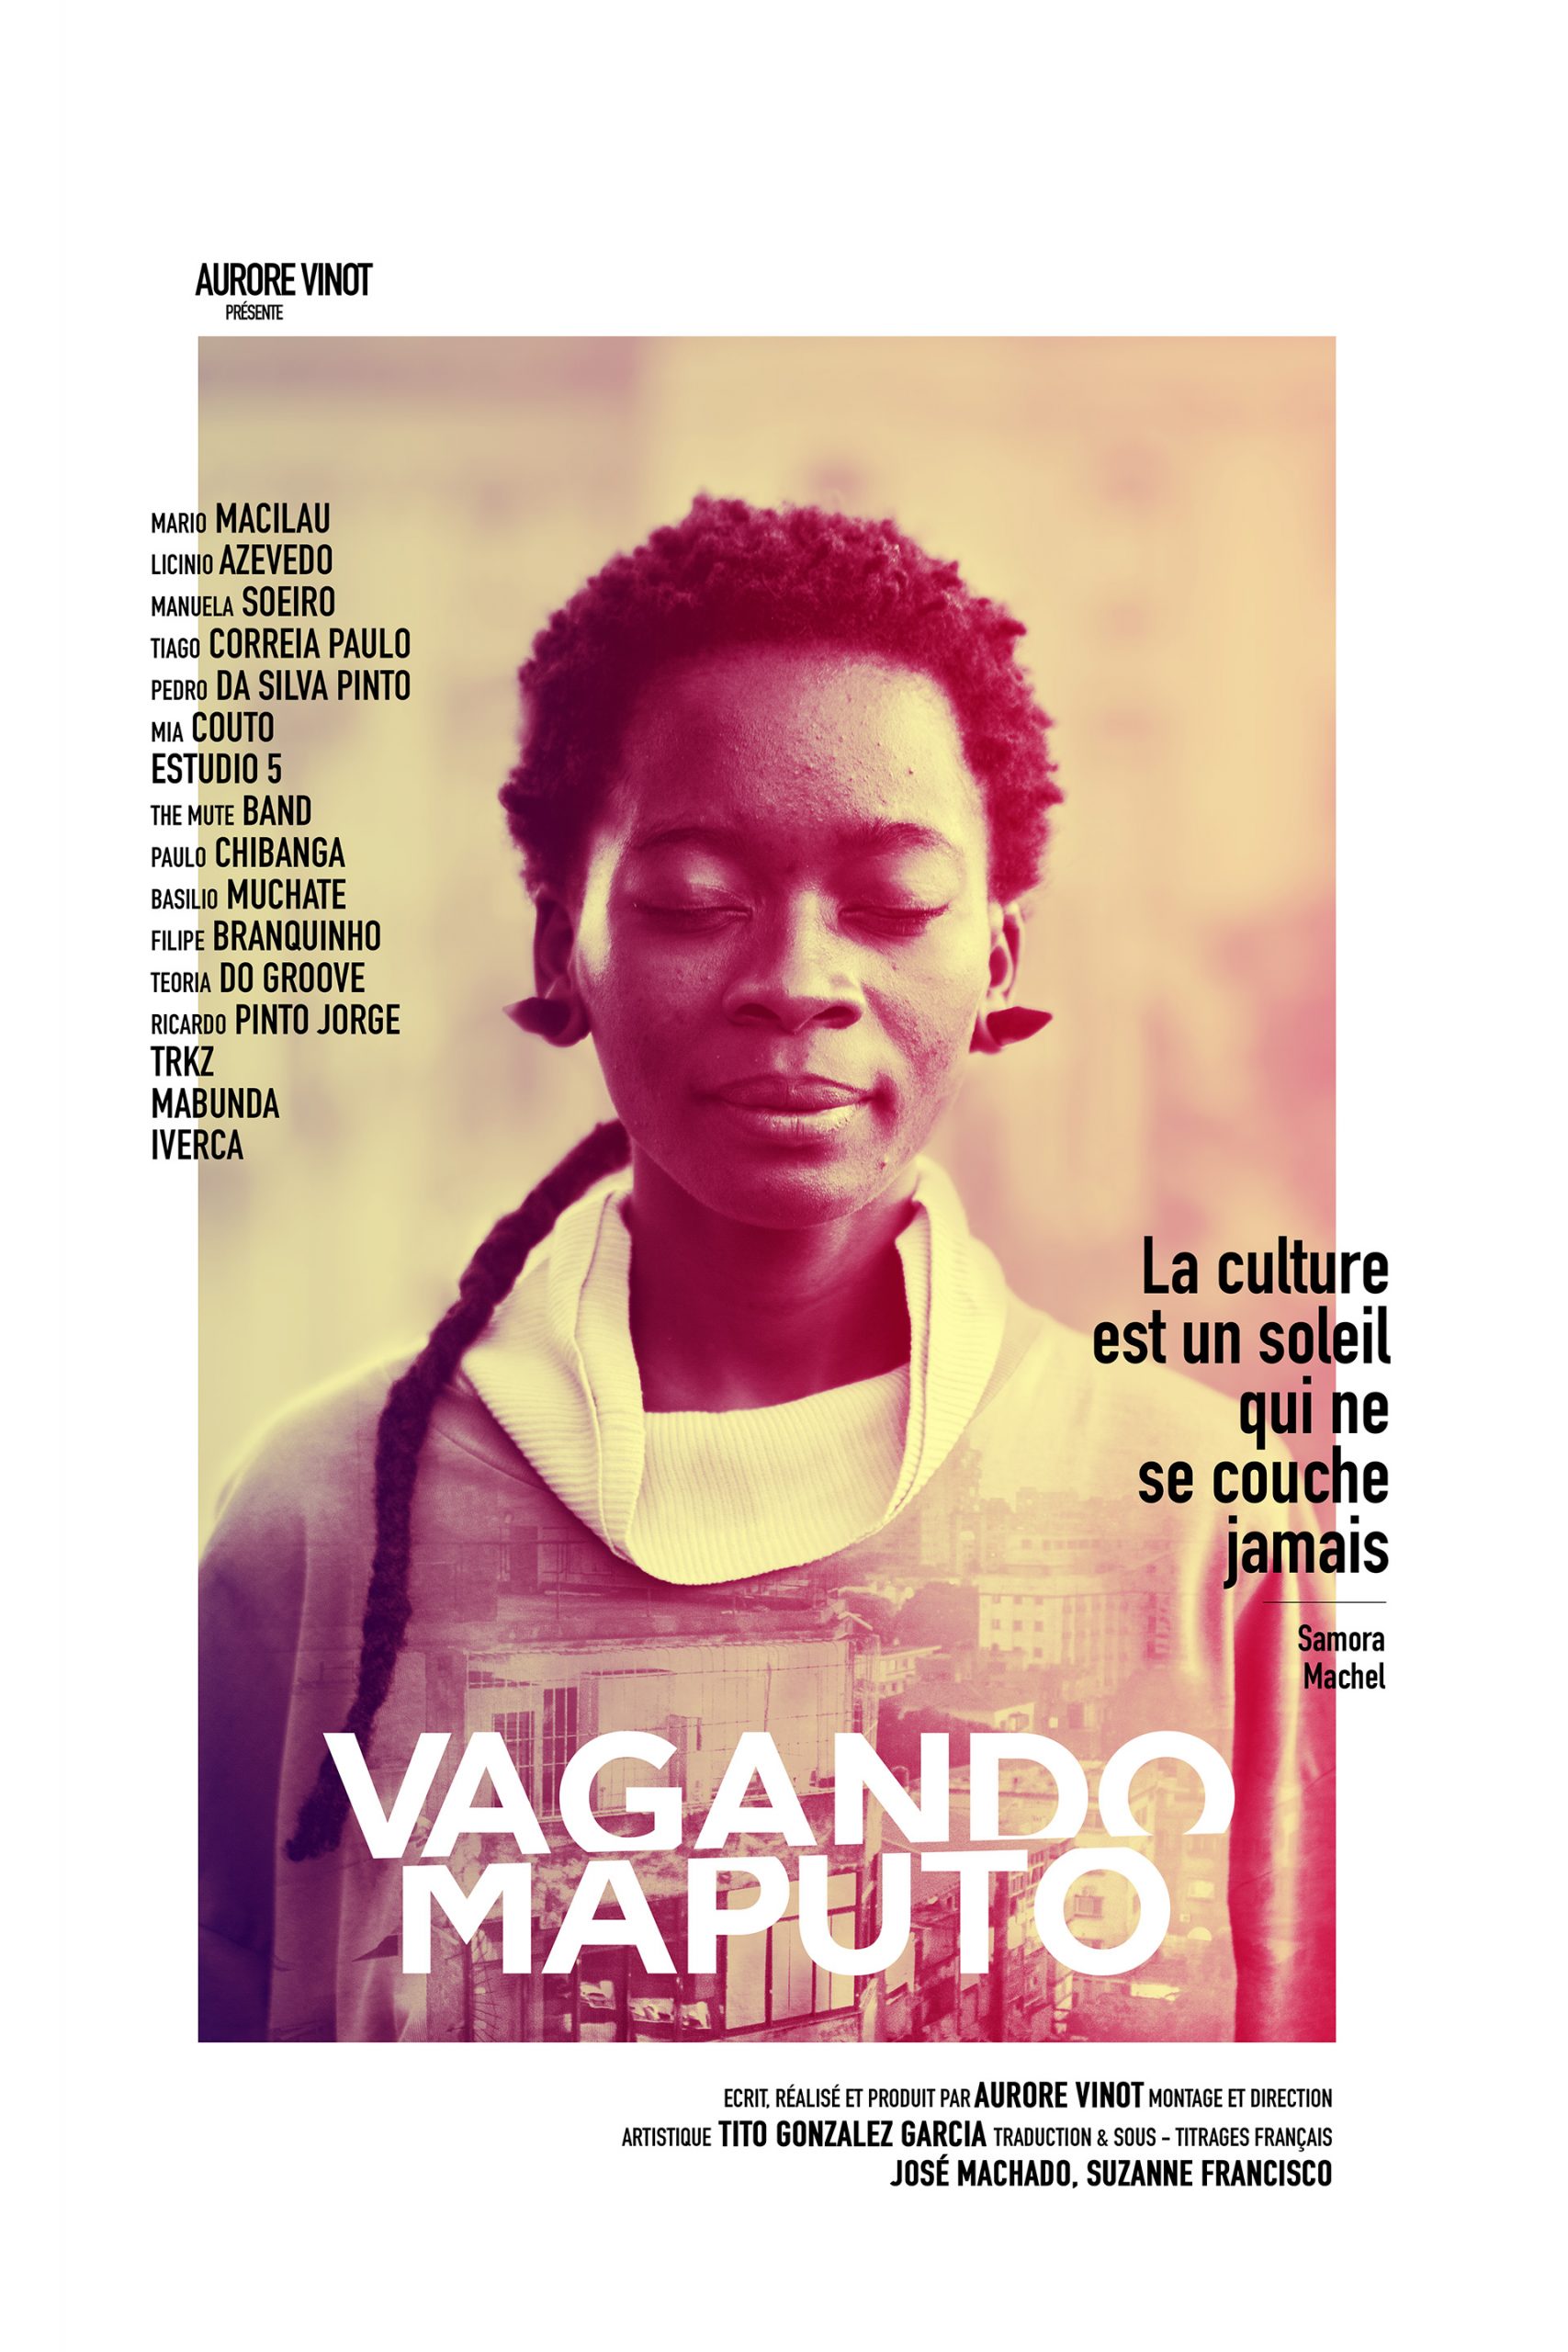 VAGANDO MAPUTO by Kart Gable | Graphiste Freelance